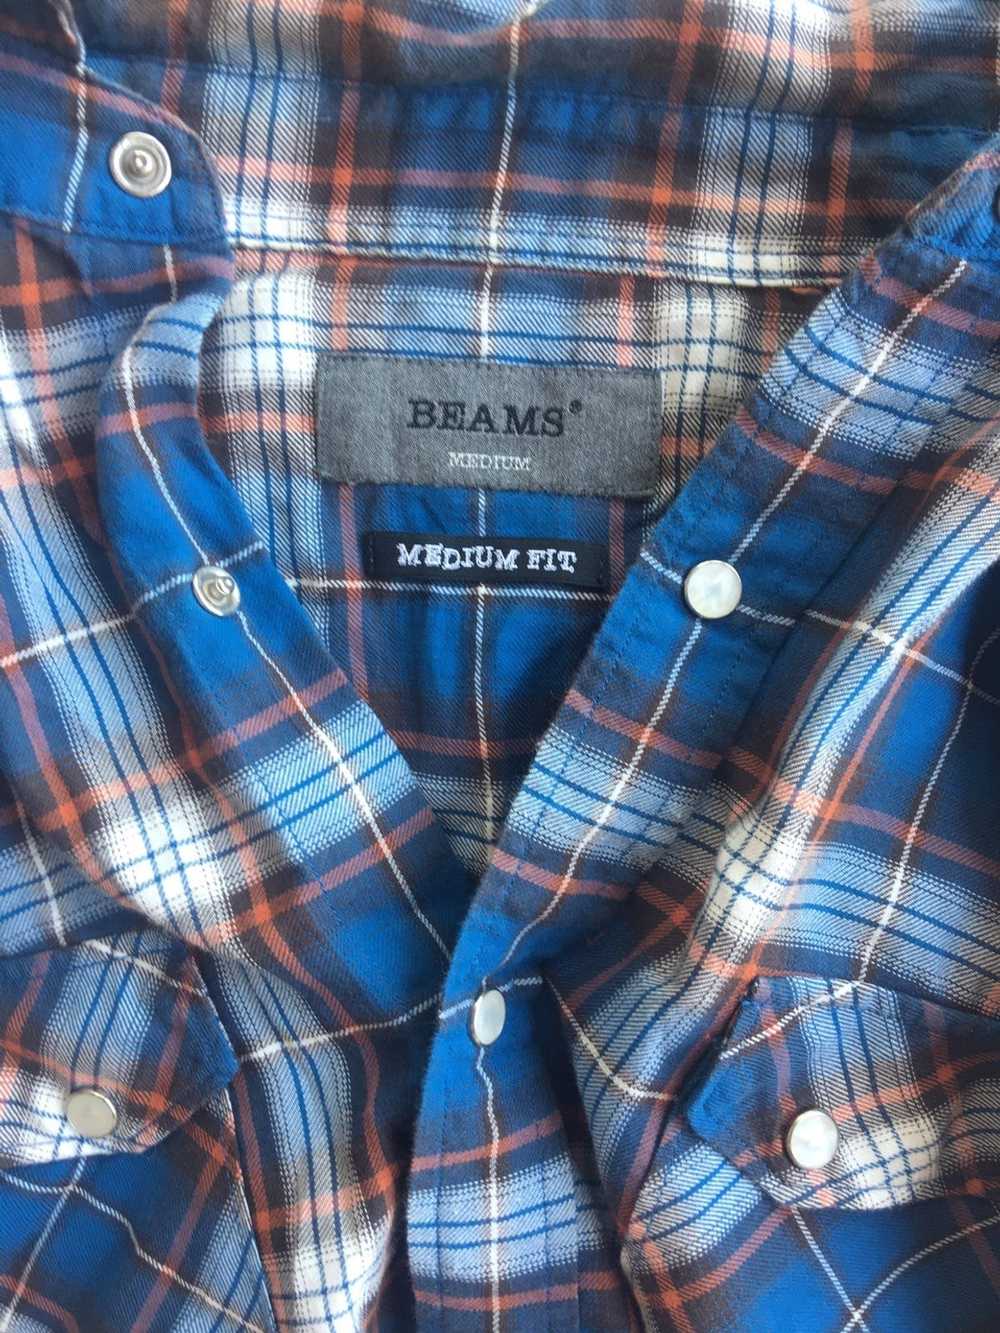 Flannel Flannel shirt medium fit - image 3